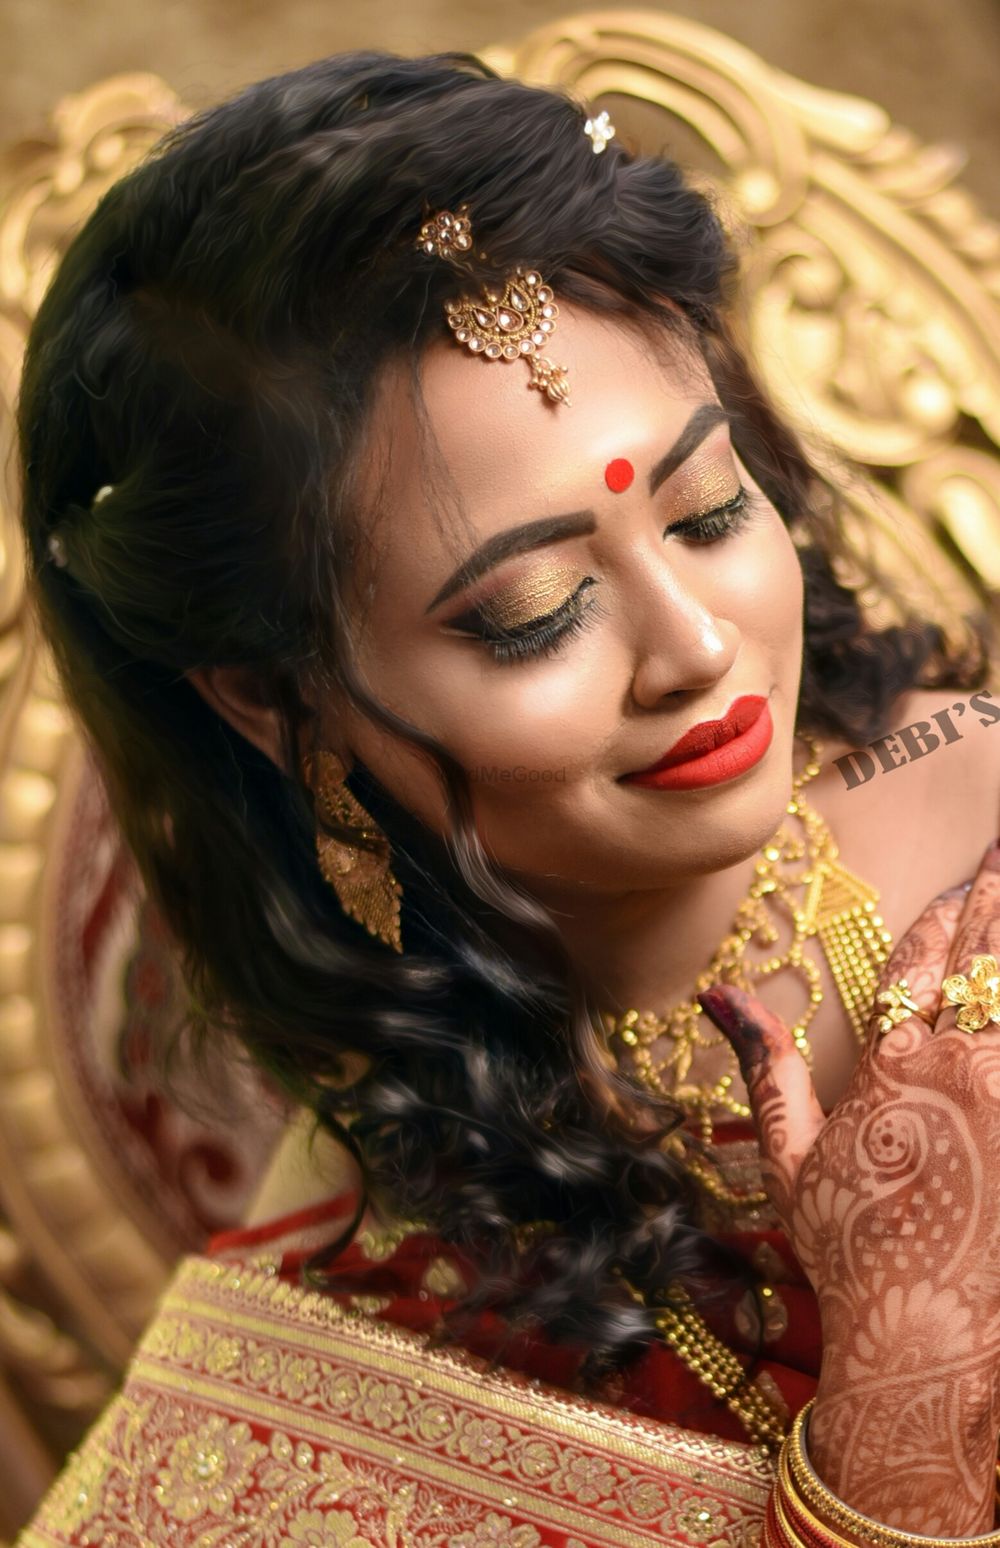 Photo From Drop-dead Gorgeous Real Brides - By Debi's Premier Makeup